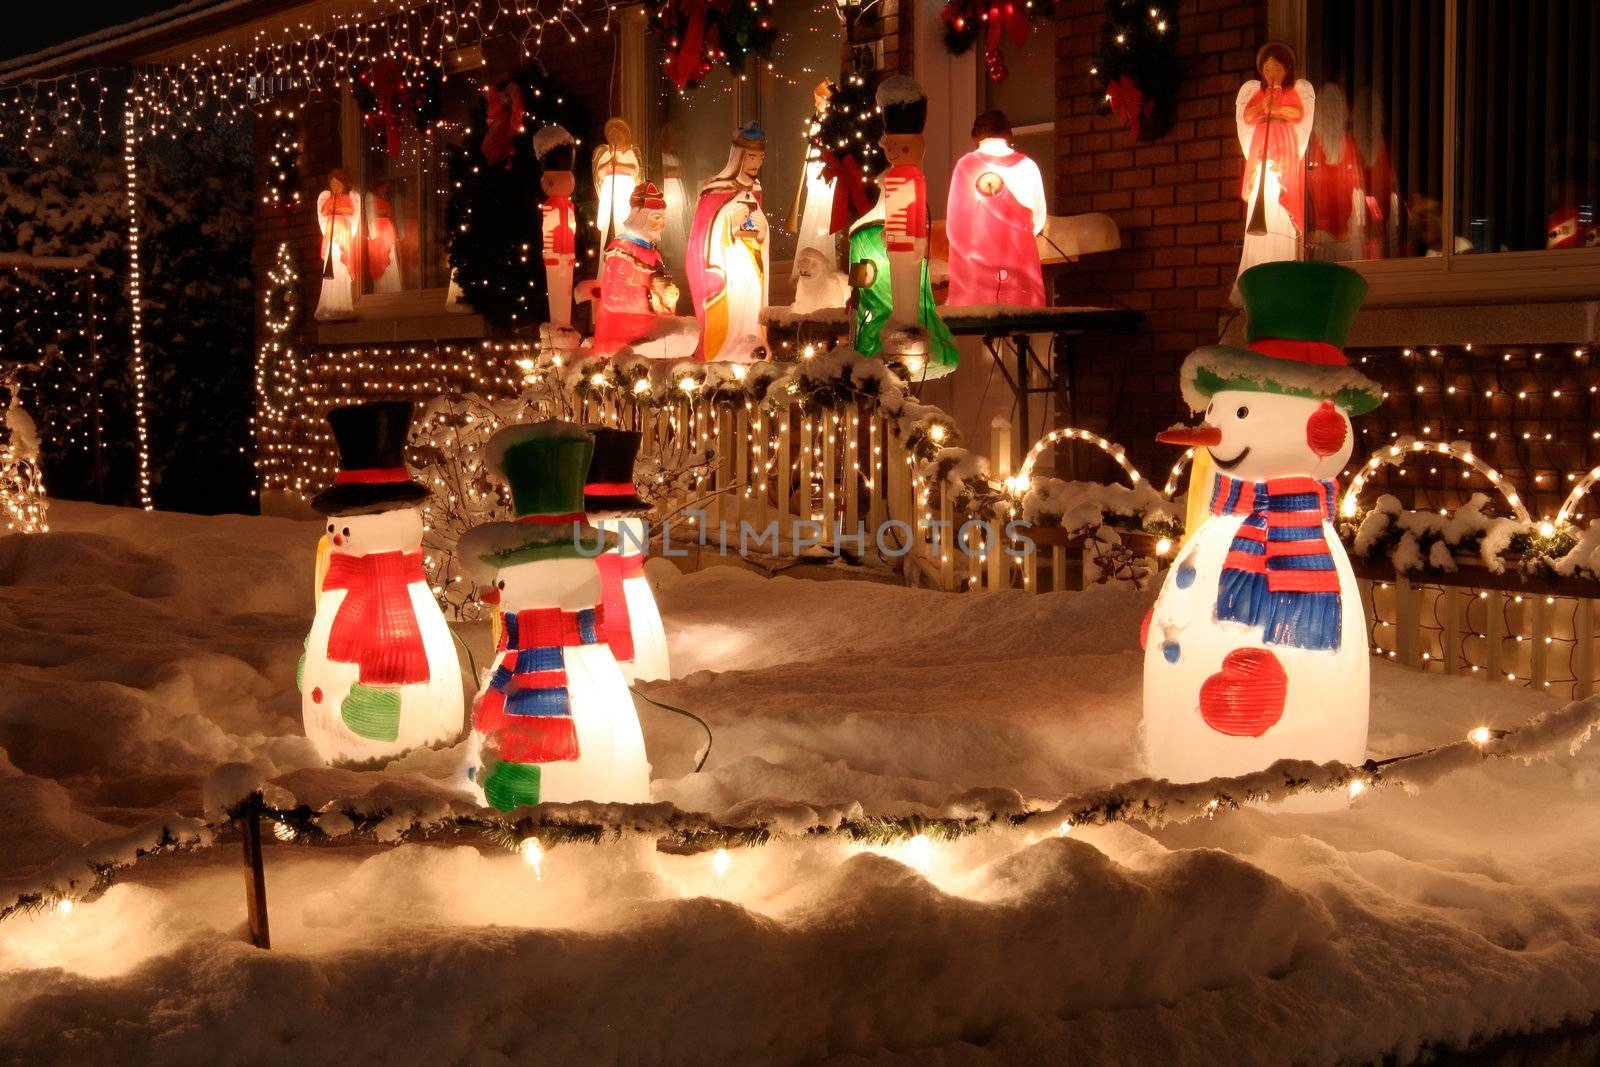 Christmas lights welcoming visitors